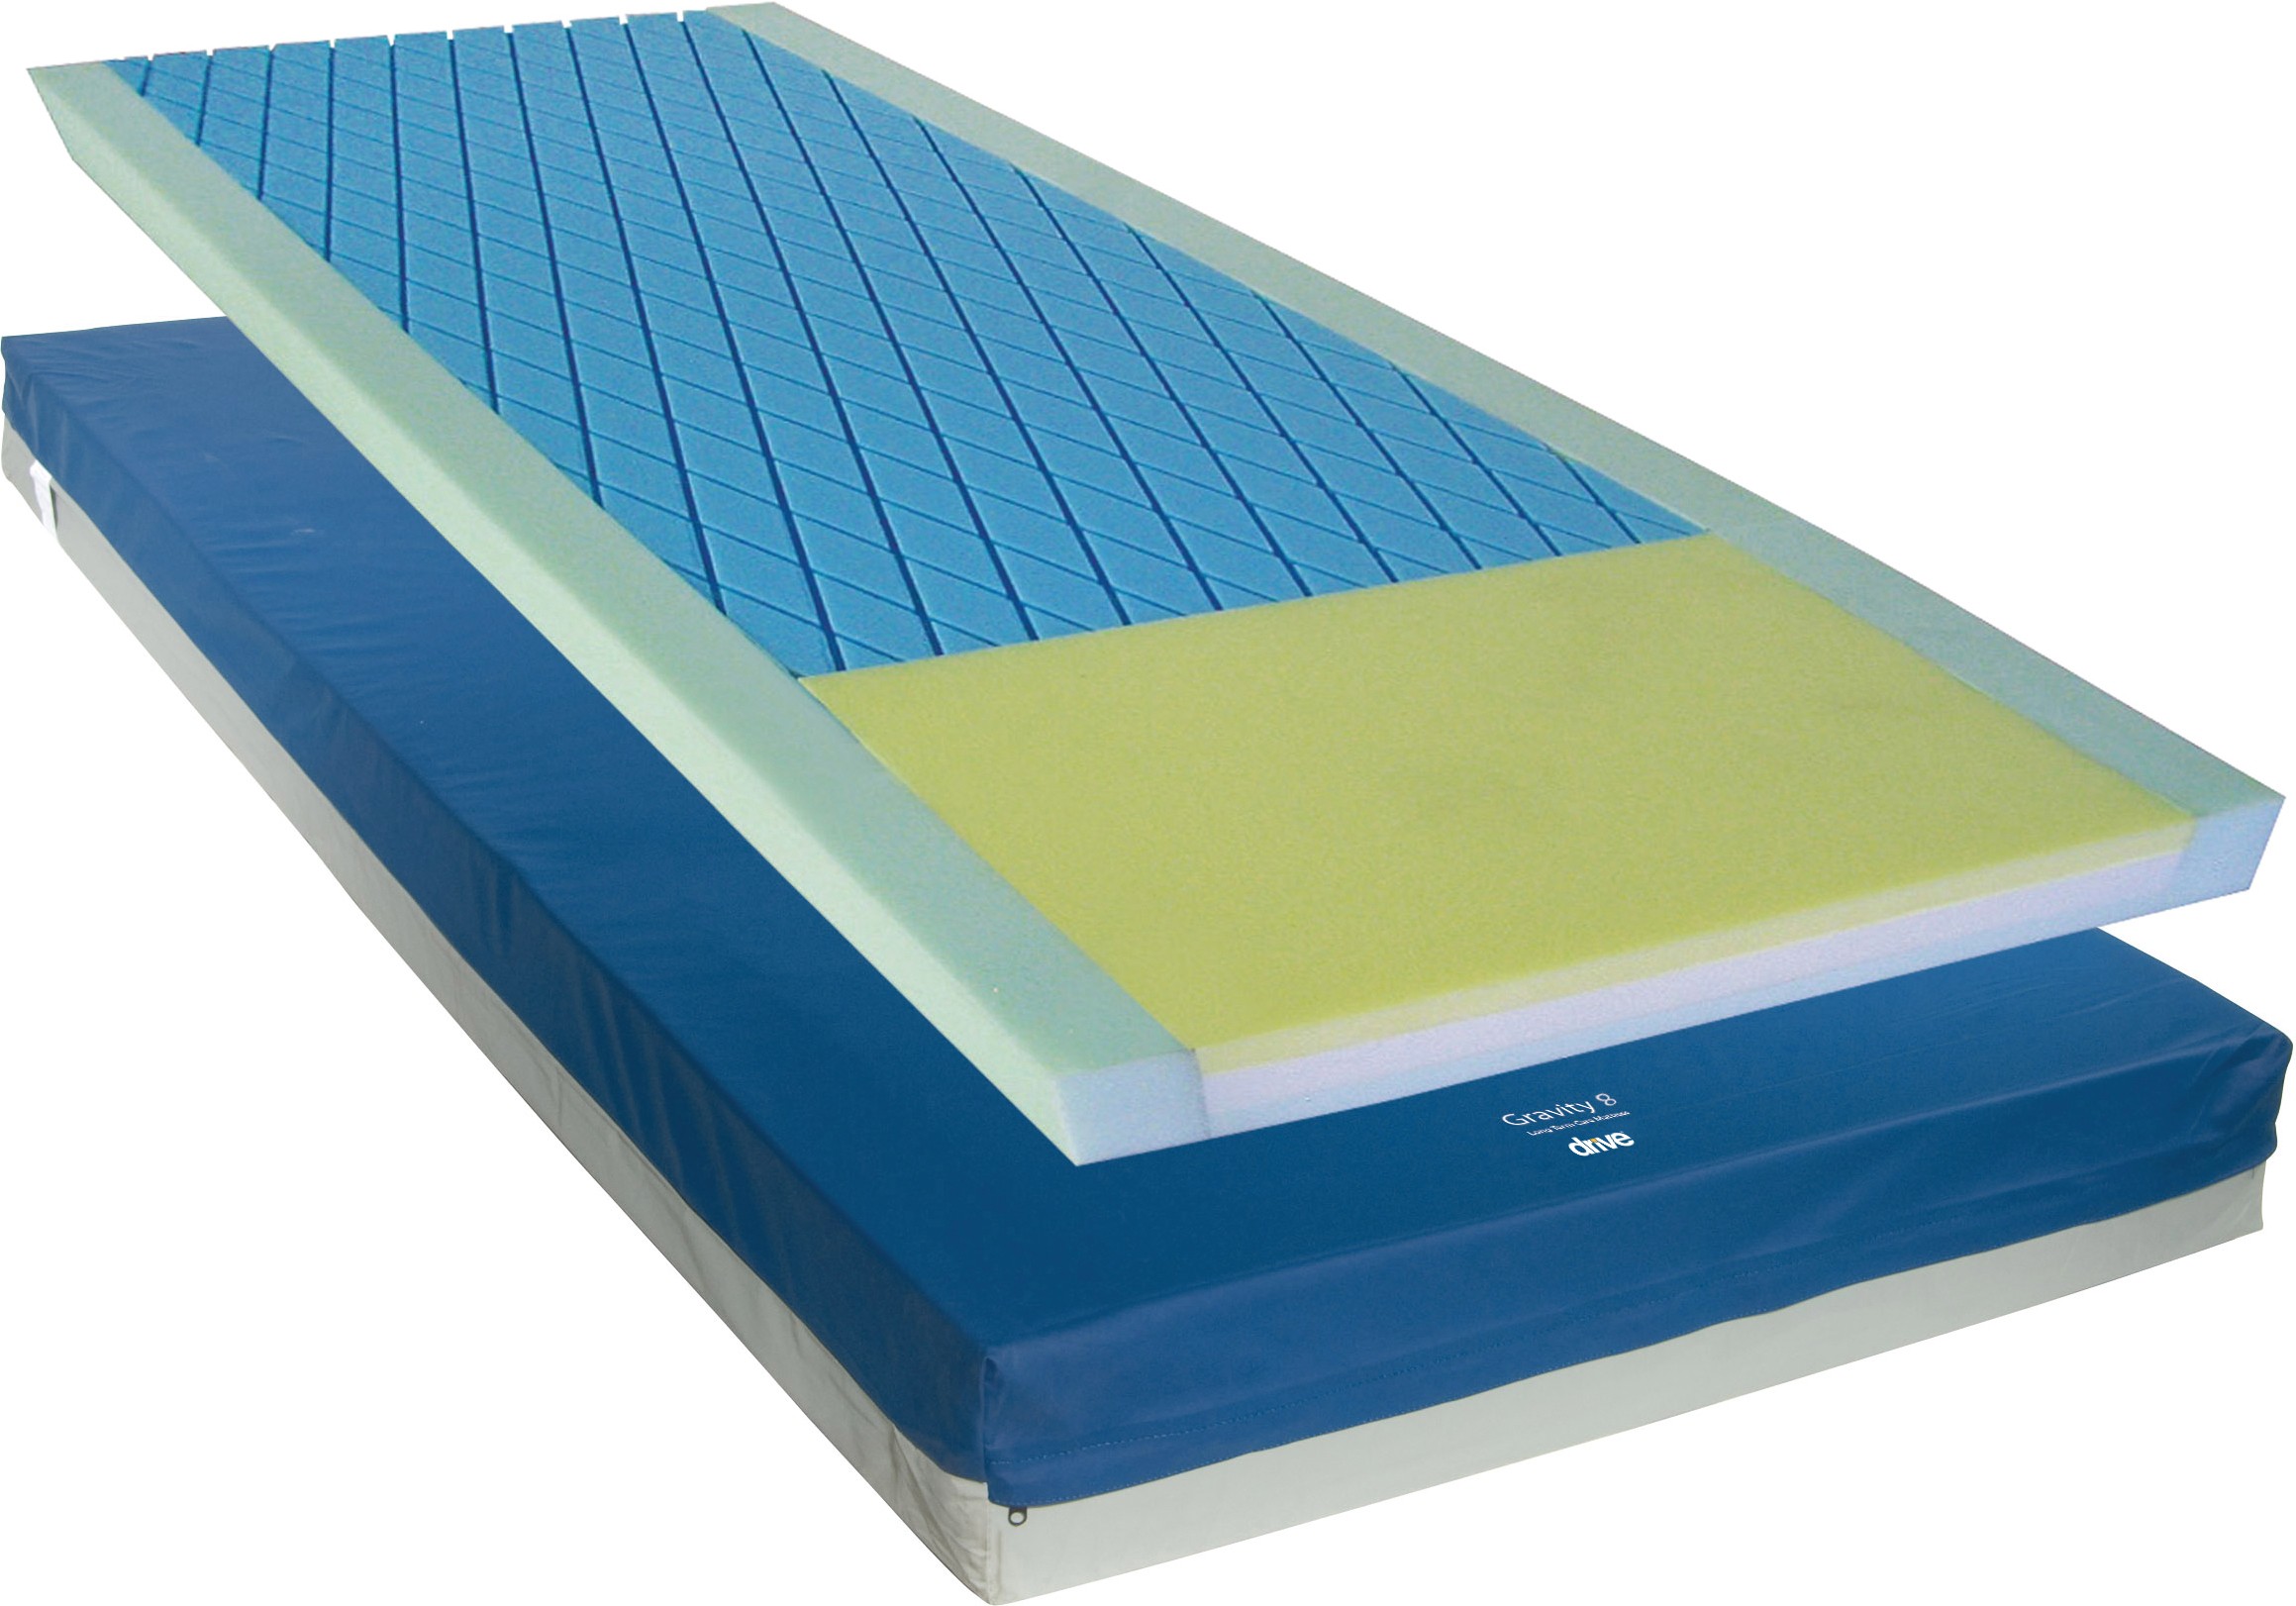 dry pressure pad for mattress